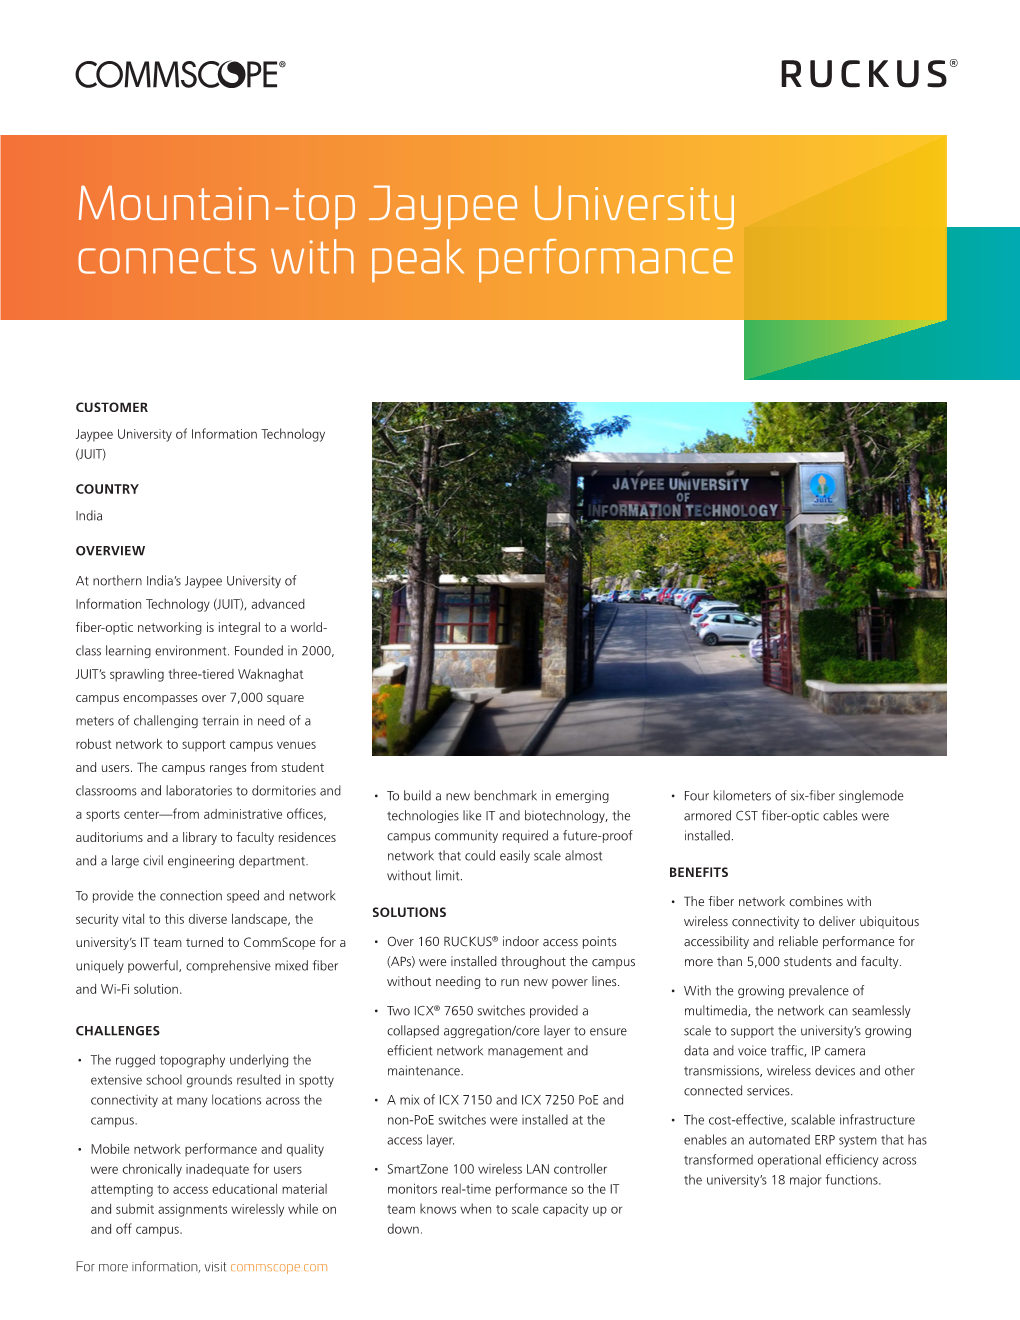 Jaypee University of Information Technology (JUIT)